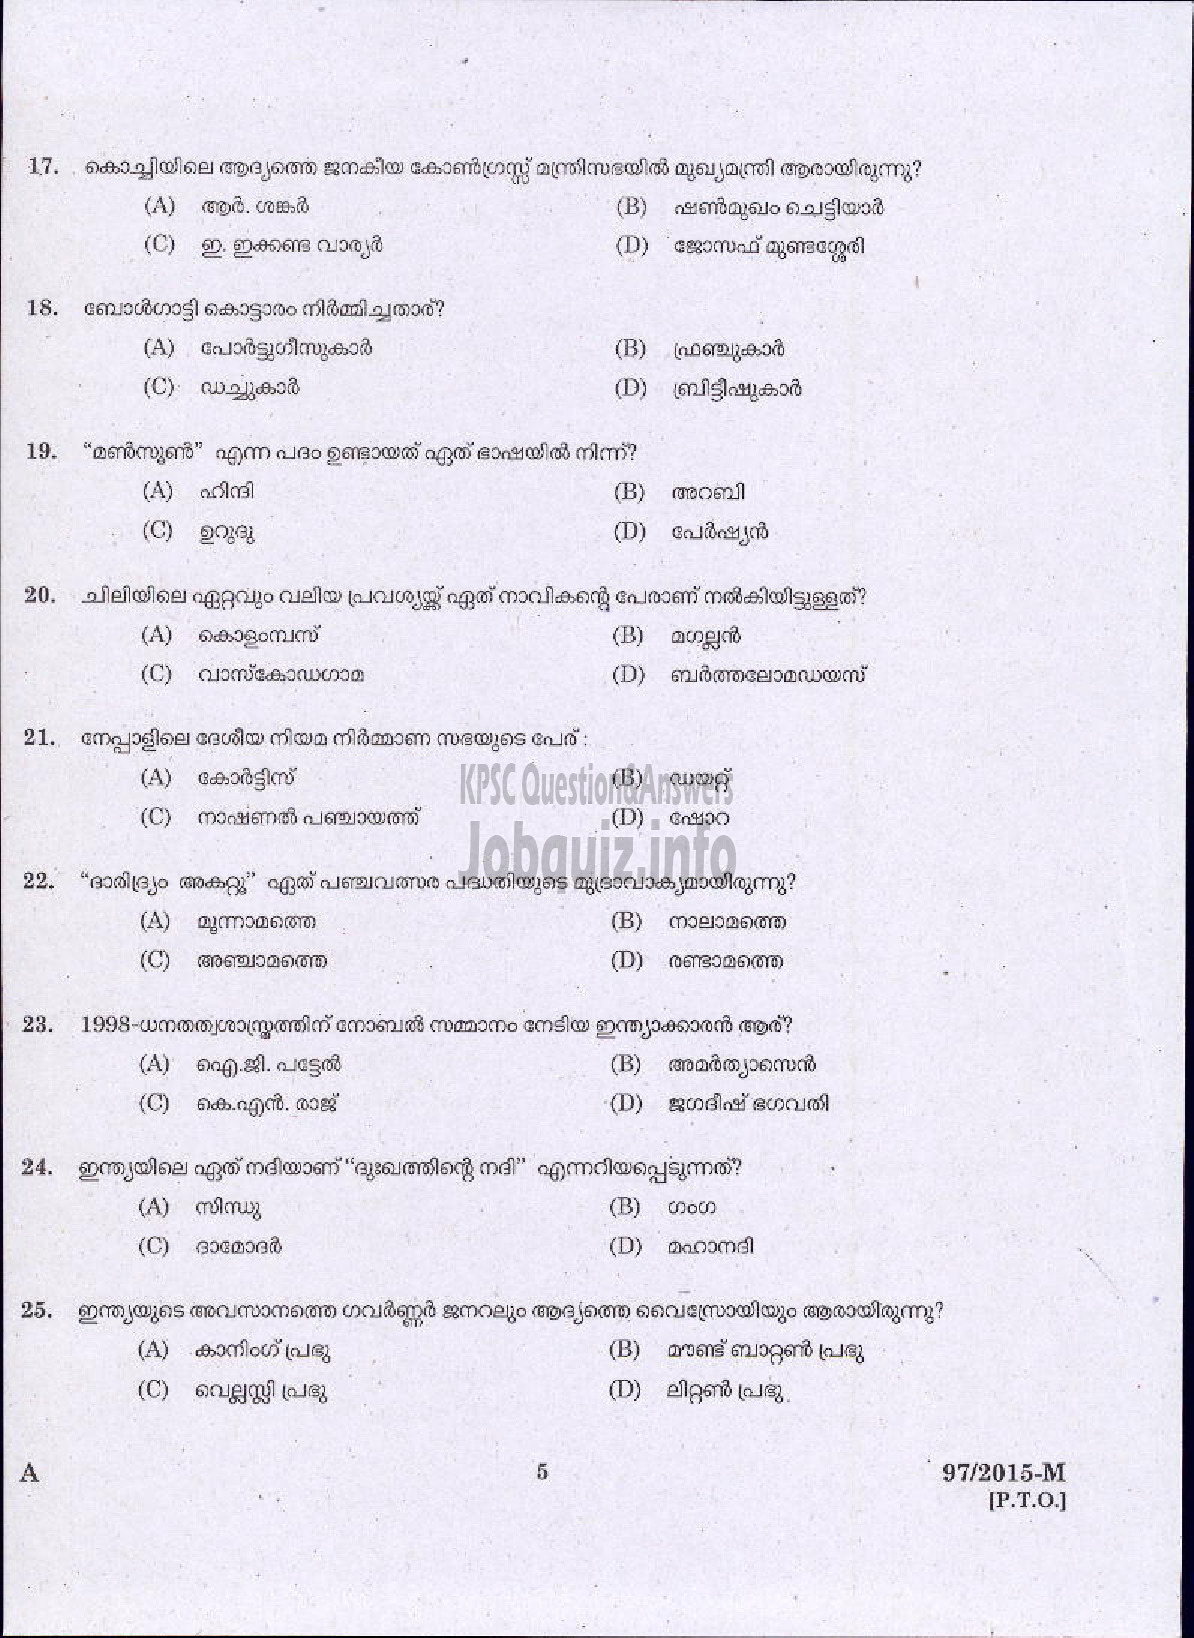 Kerala PSC Question Paper - DRIVER GR II HDV VARIOUS RESERVE DRIVER KSRTC LORRY JEEP TRACTOR KERALA CERAMICS LTD PLANTATION CORP OF KERALA LTD DRIVER HDV EXCISE-3